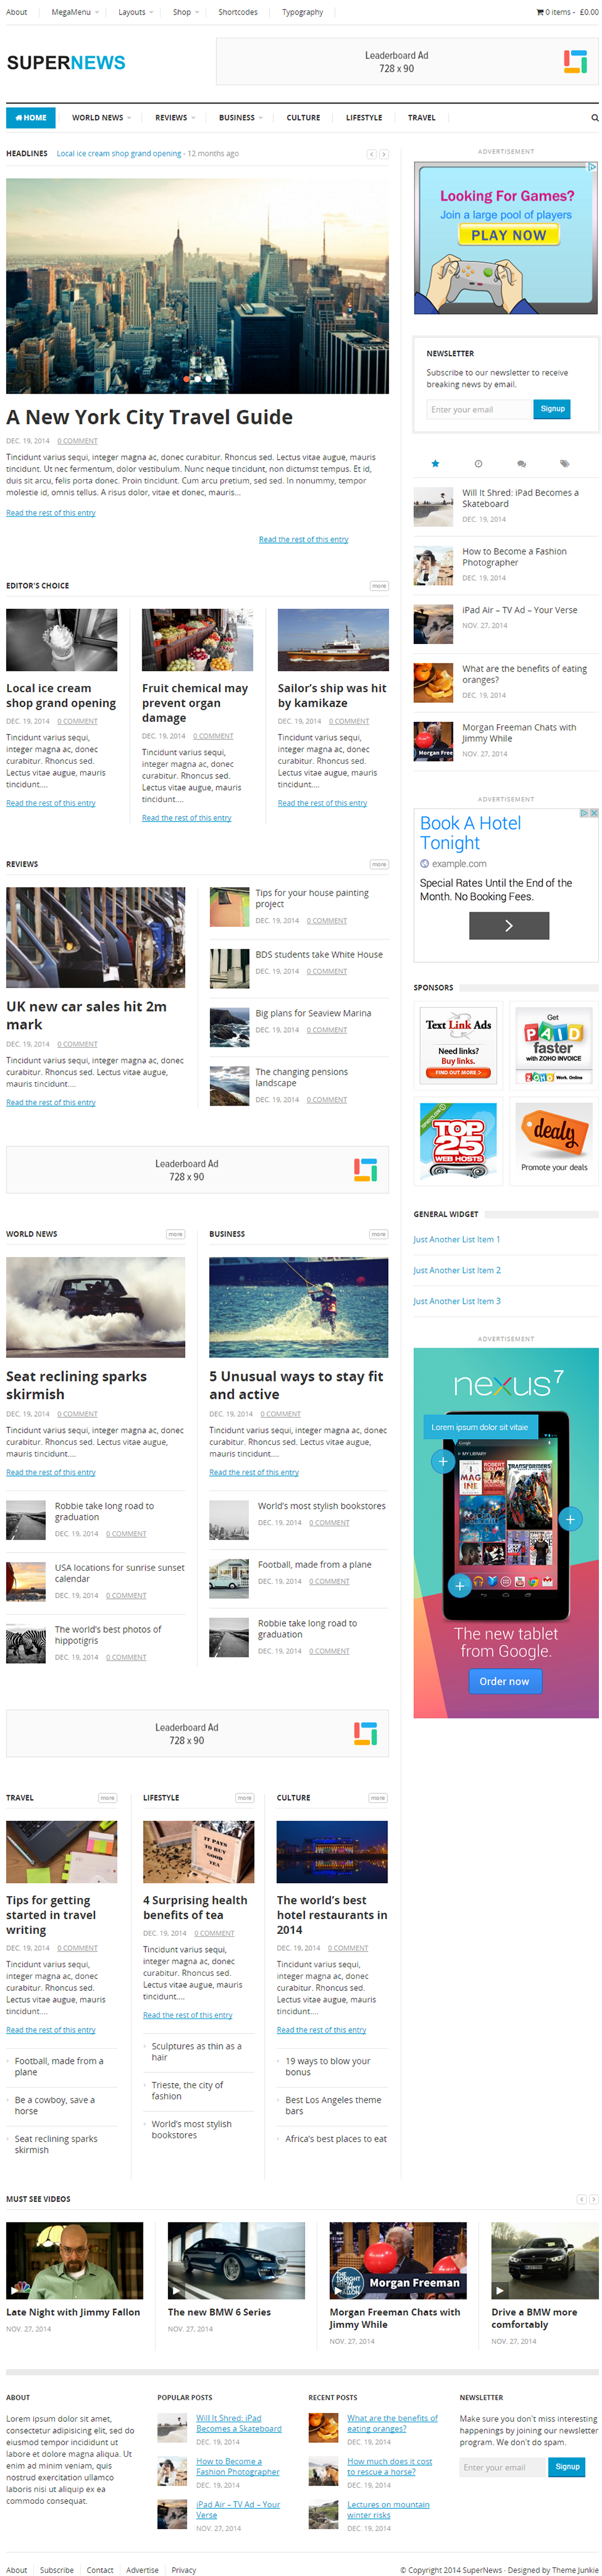 SuperNews - Ultimate WordPress Magazine Theme